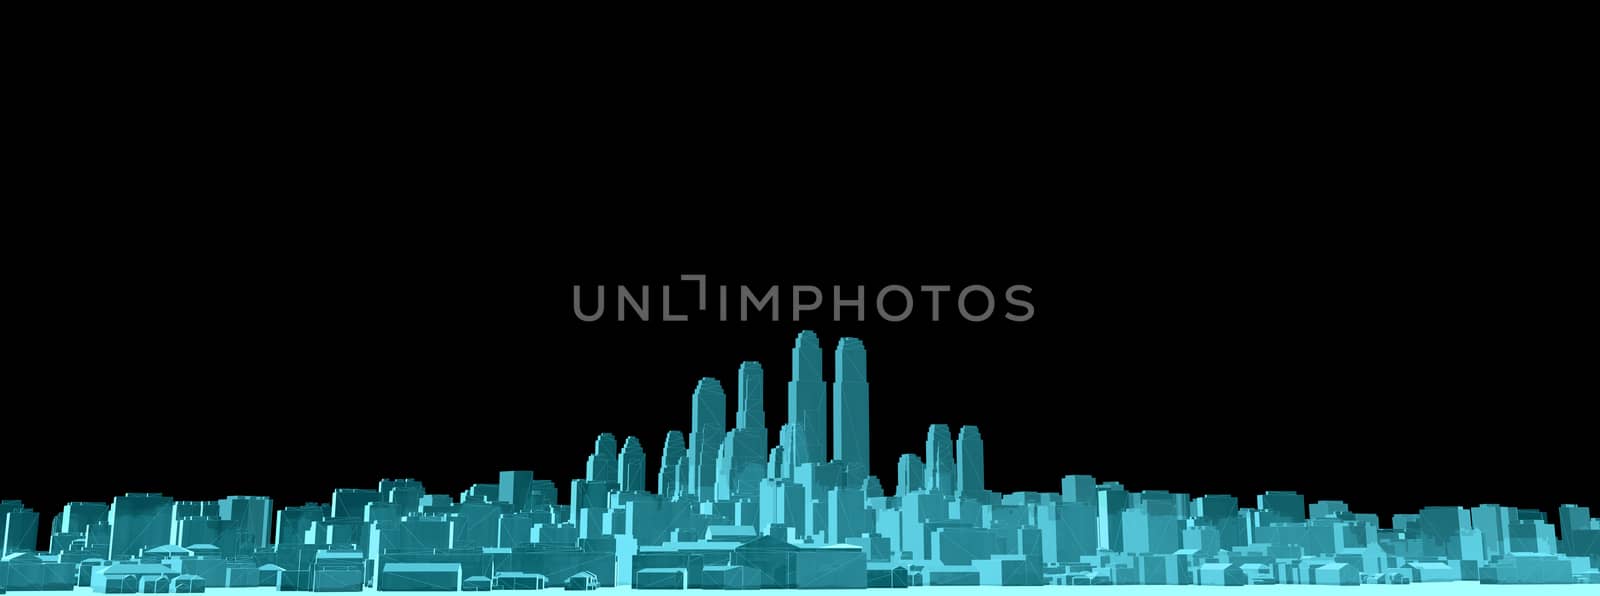 X-Ray Image Of Modern City on Black by cherezoff